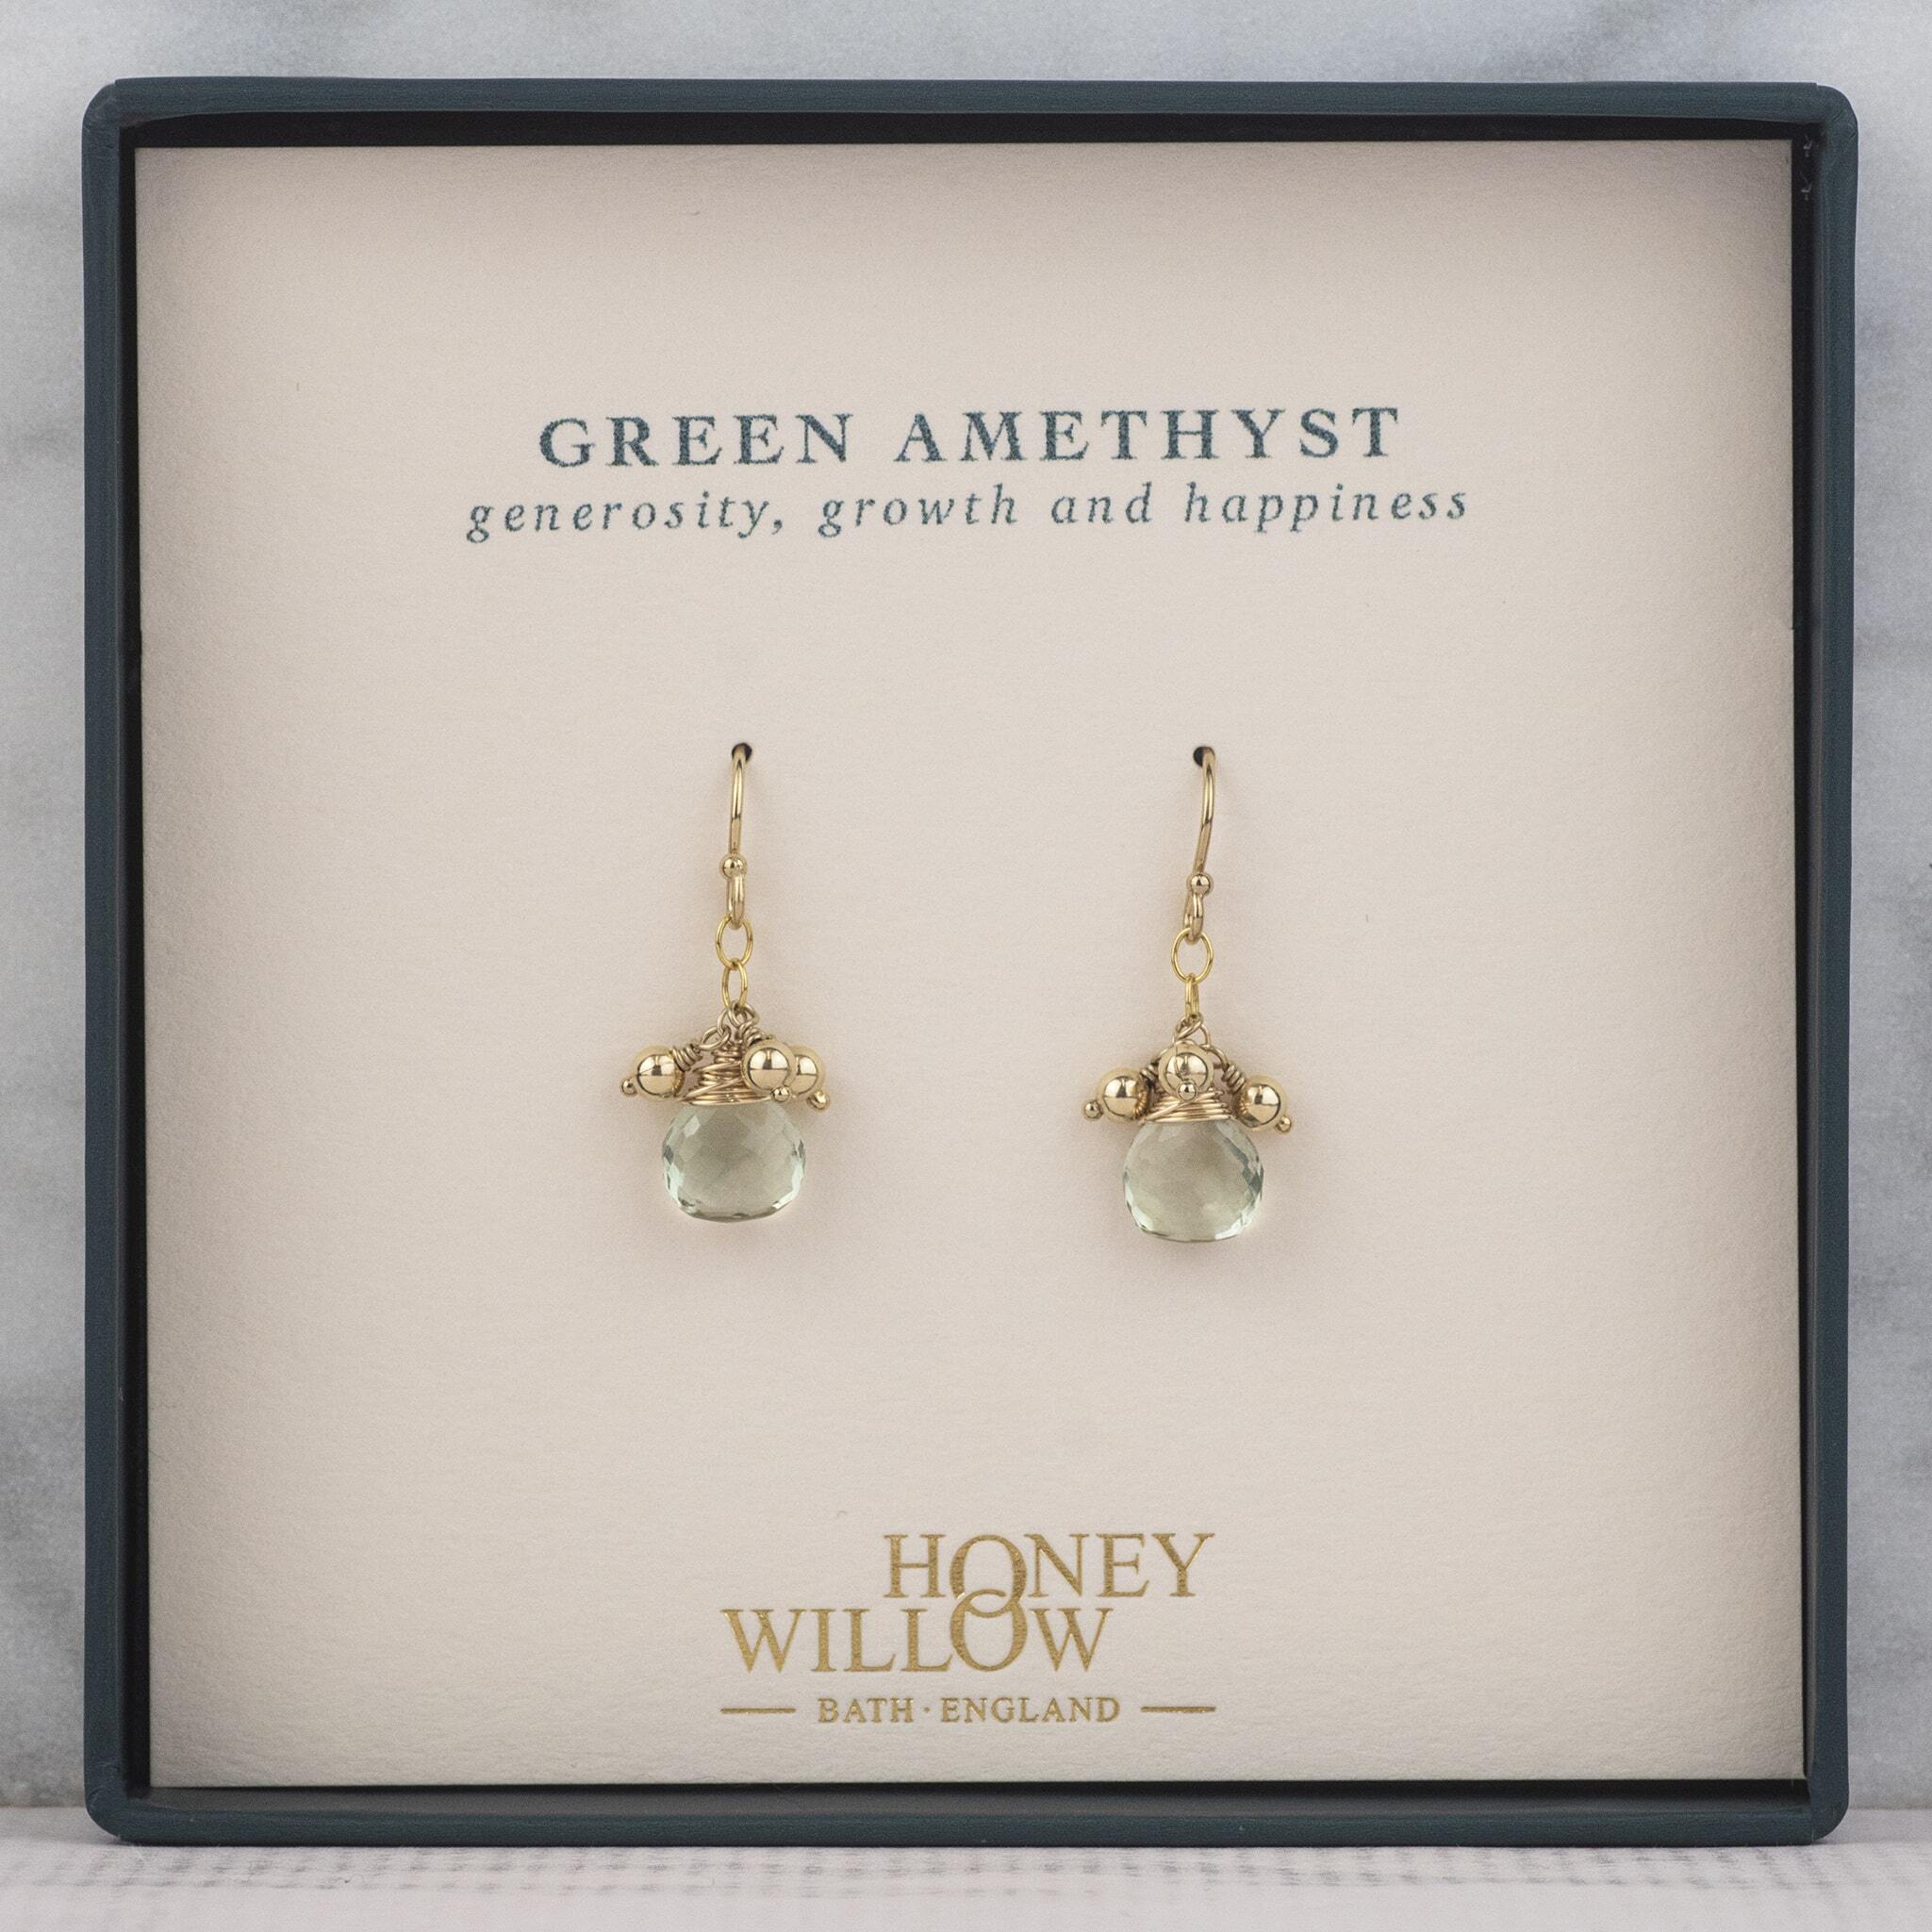 Details more than 283 green amethyst drop earrings super hot